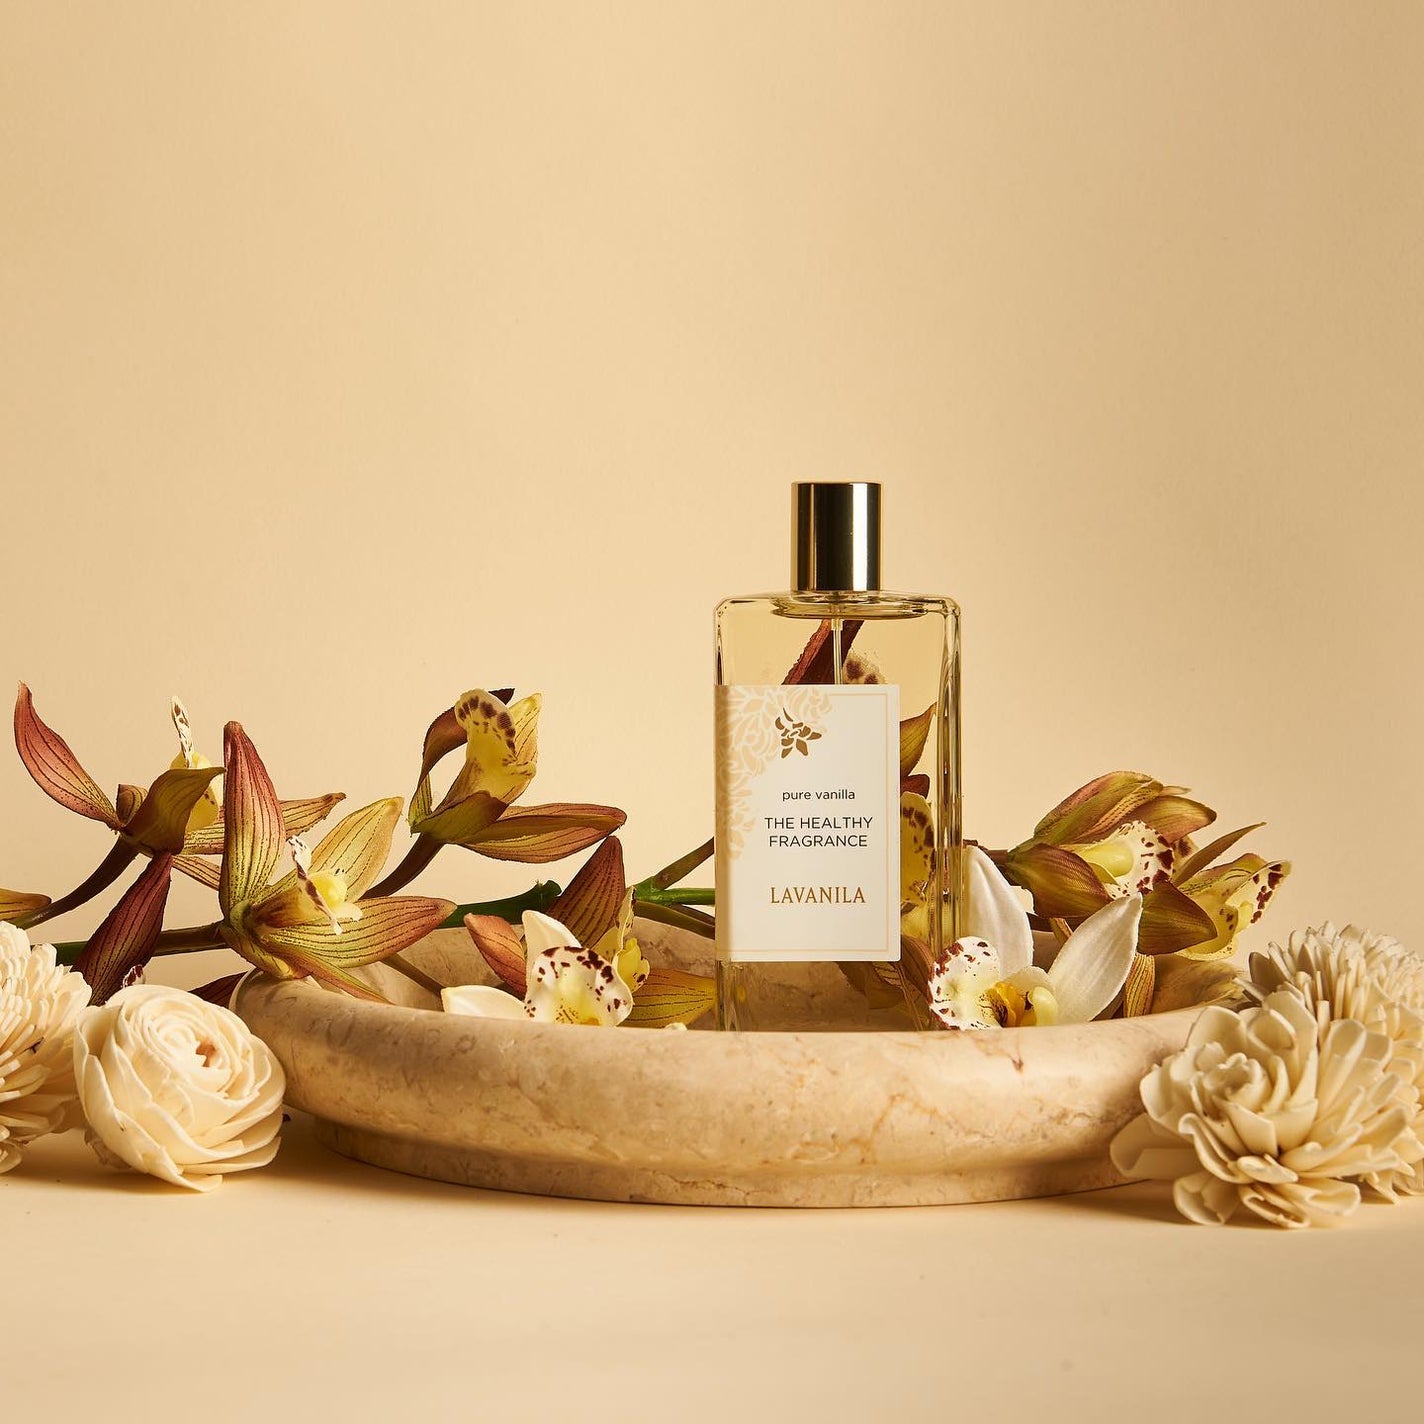 Lavanila Ltd Edition Pure Vanilla Healthy Fragrance - 100ml